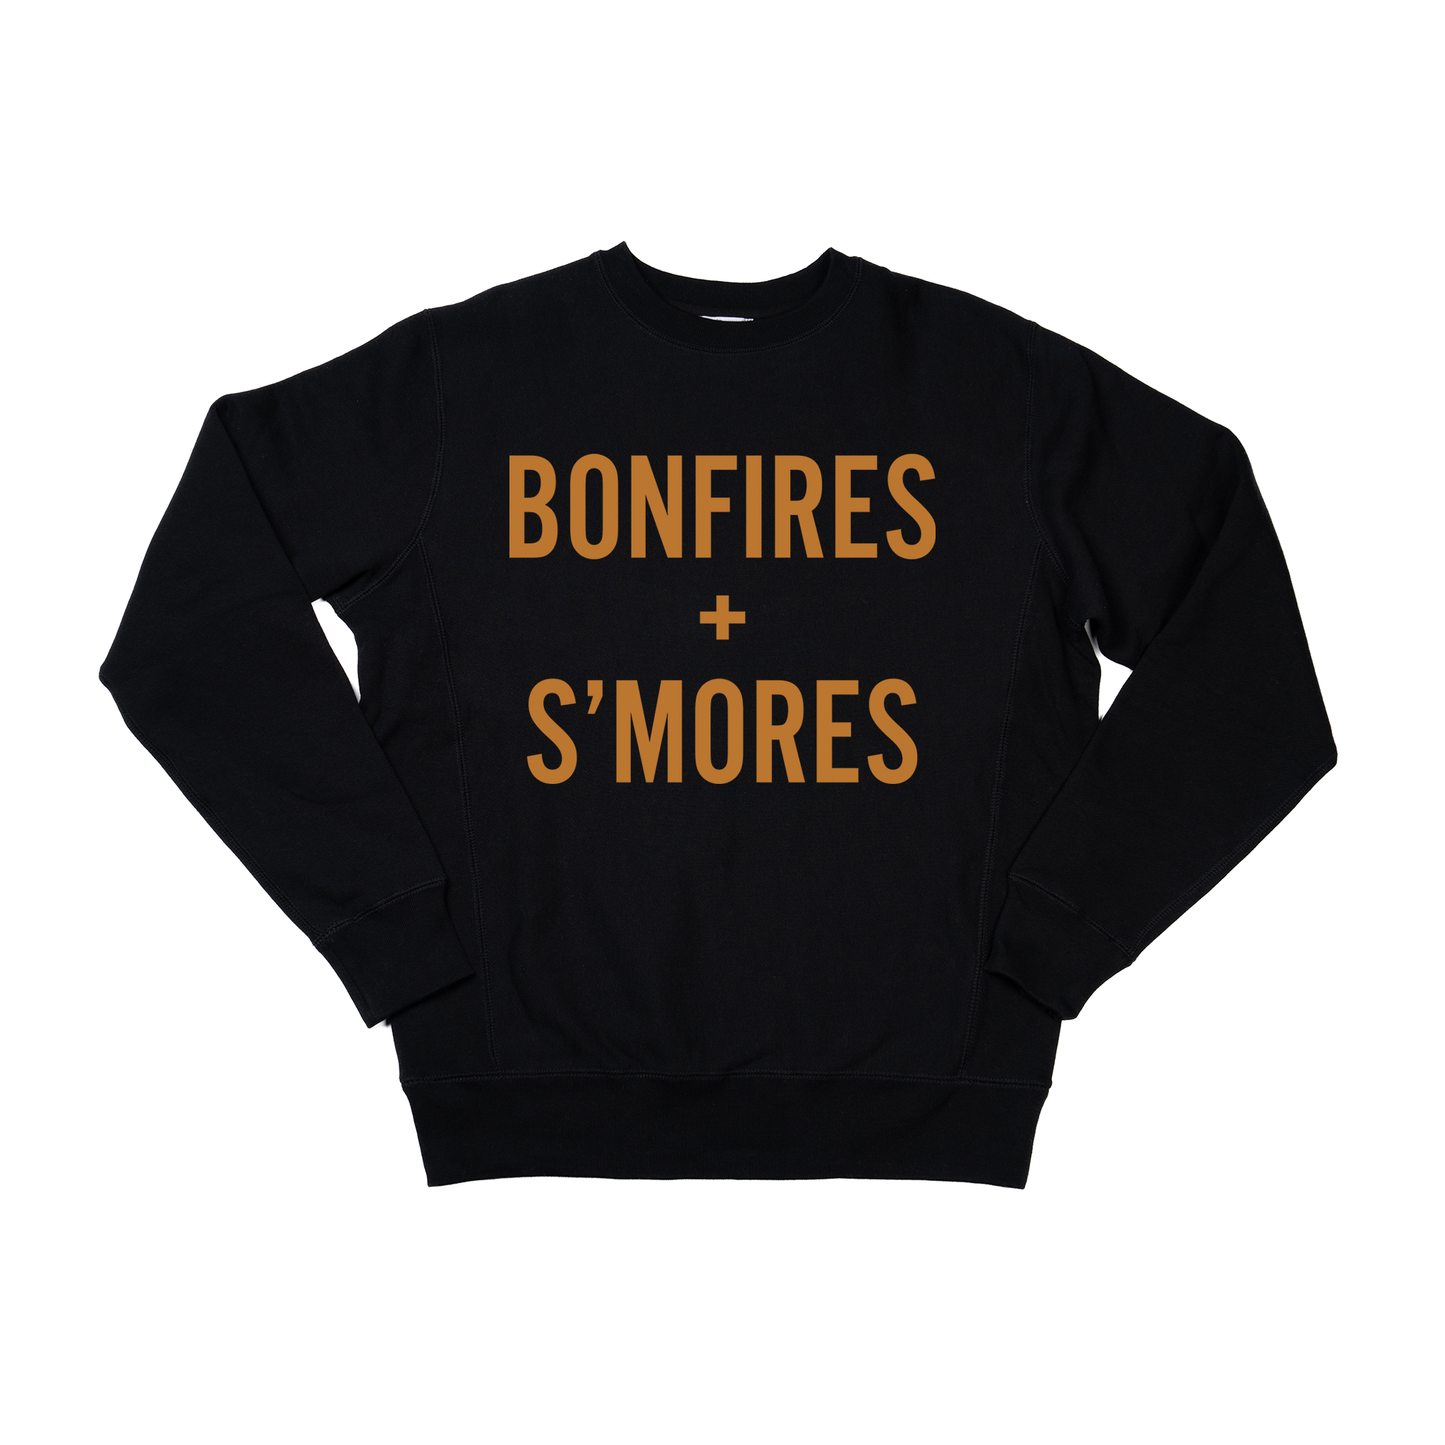 Bonfires + S'mores (Camel) - Heavyweight Sweatshirt (Black)